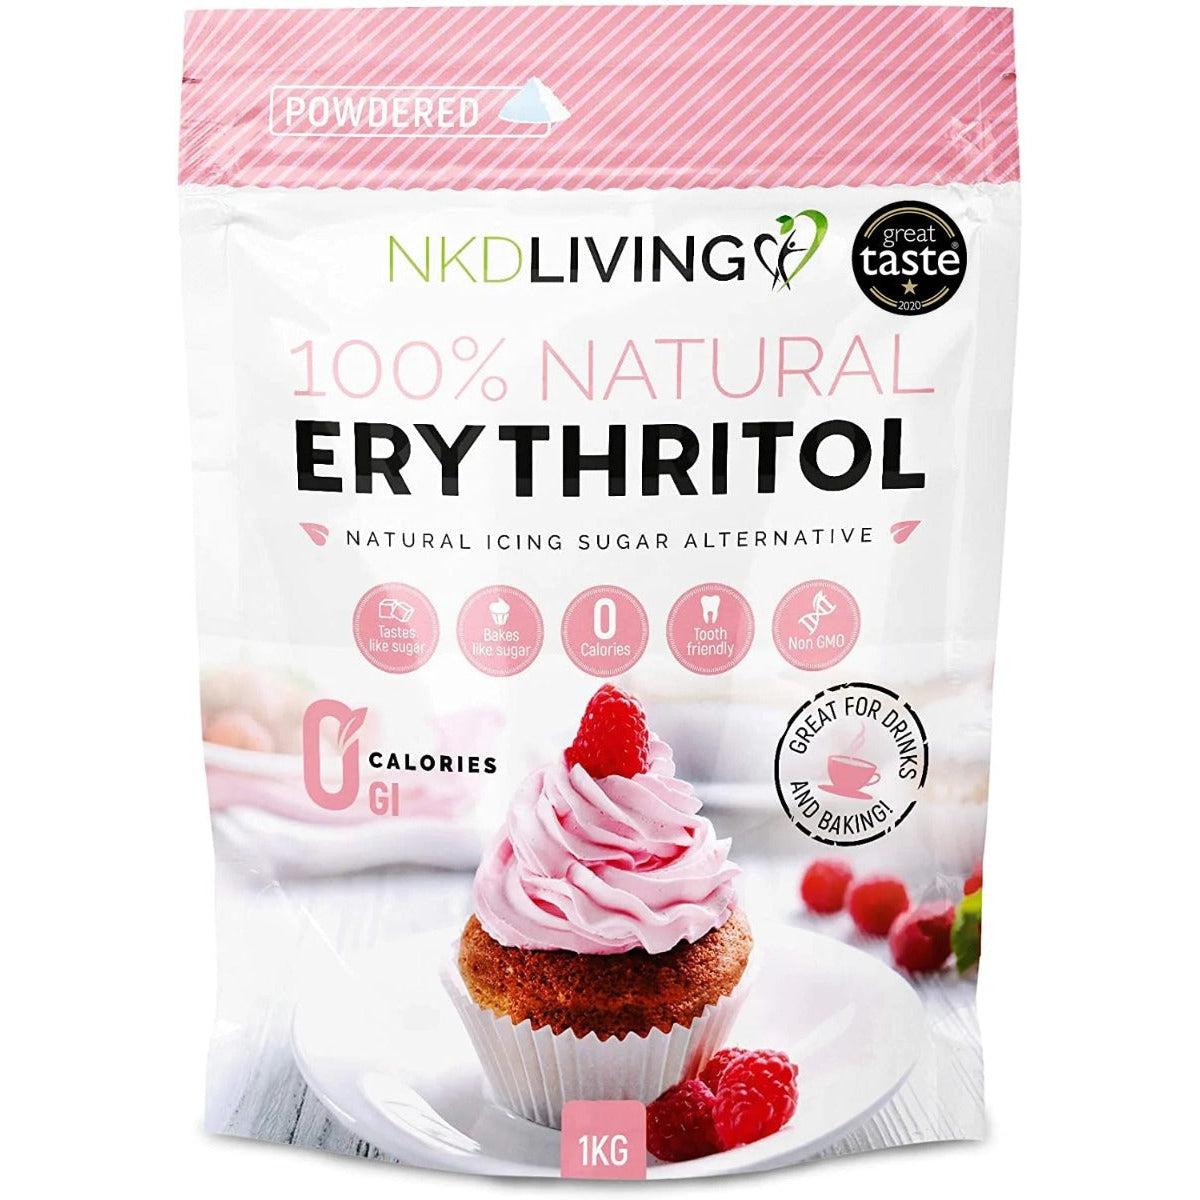 NKD Living 100% Natural Erythritol Natural Sugar Alternative Powdered Keto Friendly 1KG